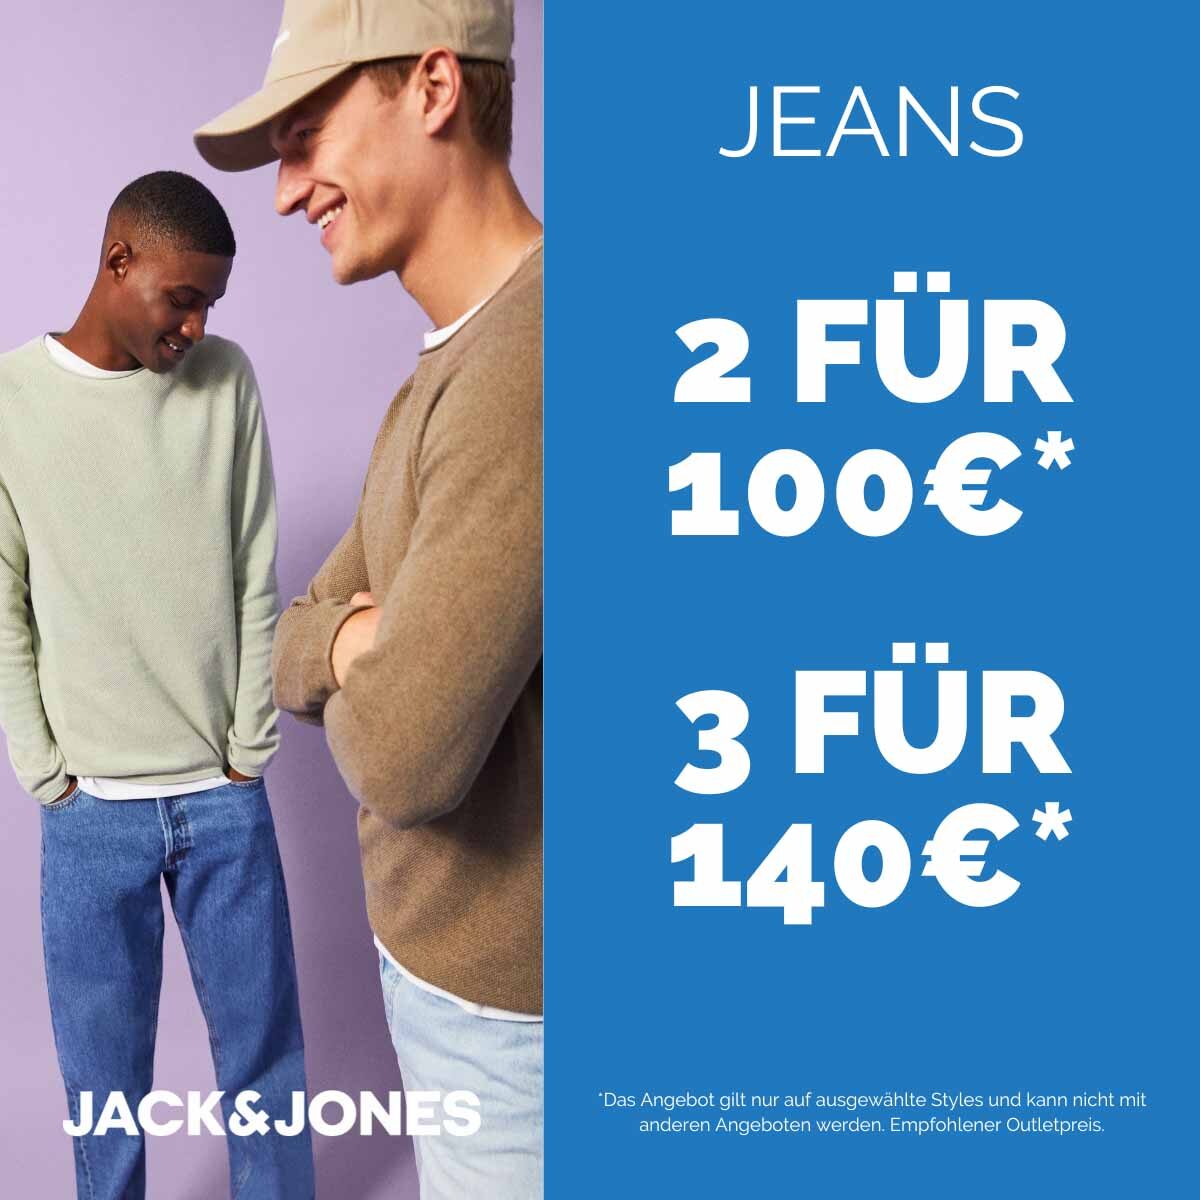 Jack&Jones Jeans Aktion